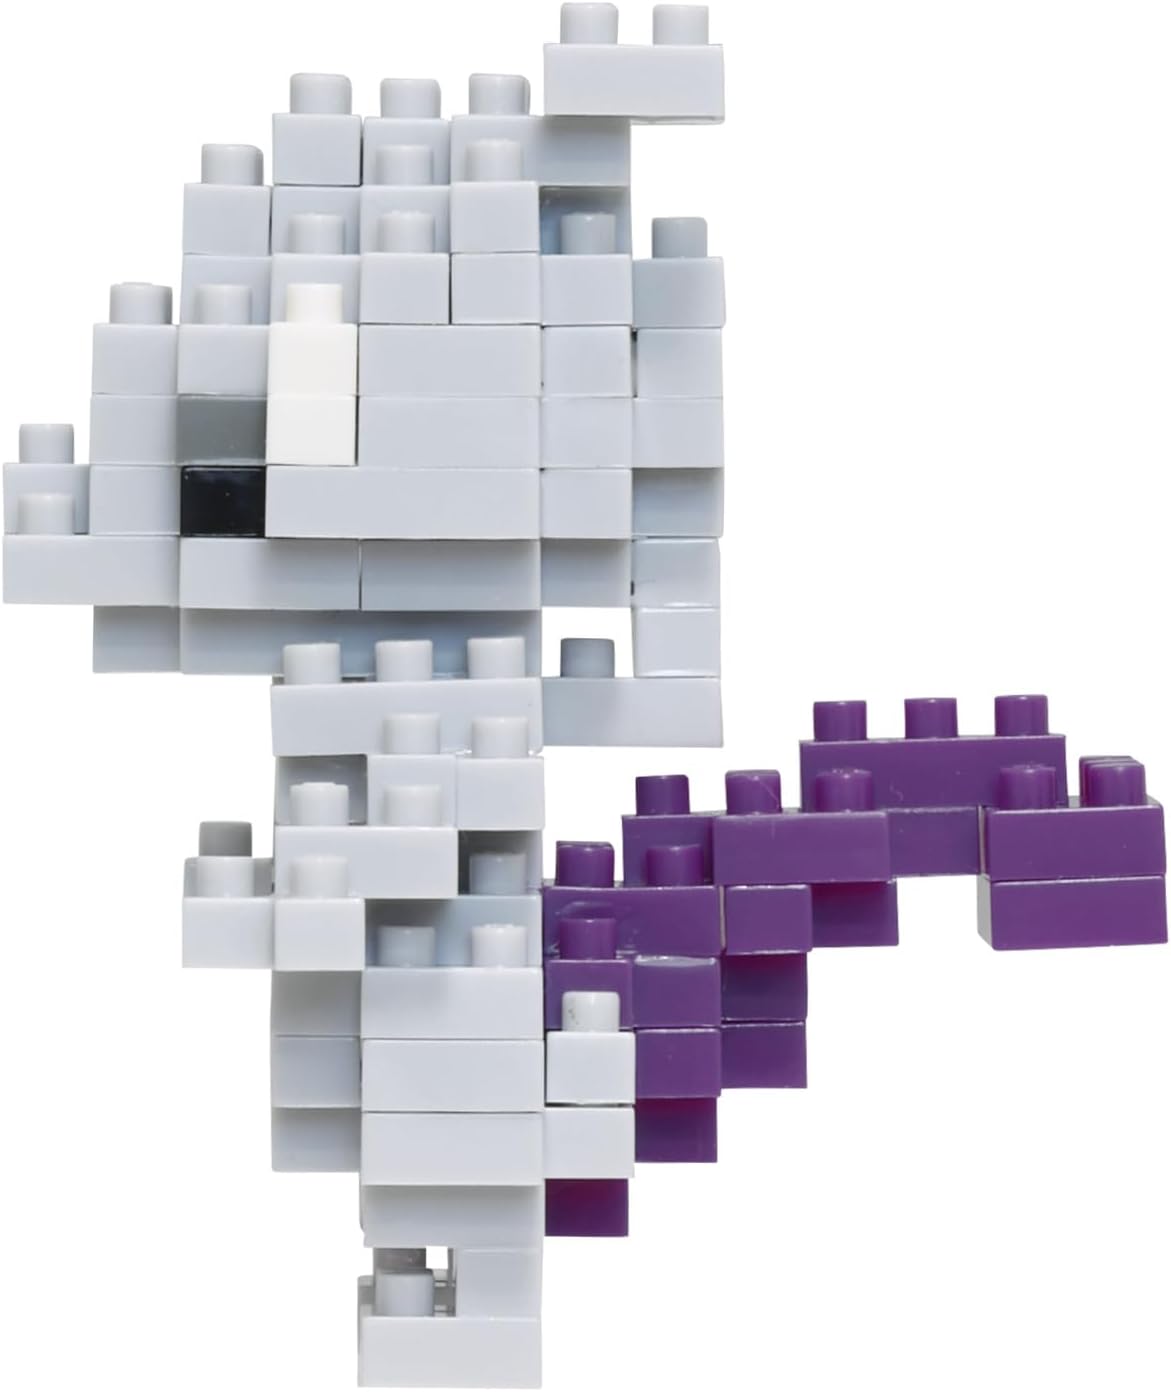 POKEMON - Mewtwo 006 Nanoblock Pack